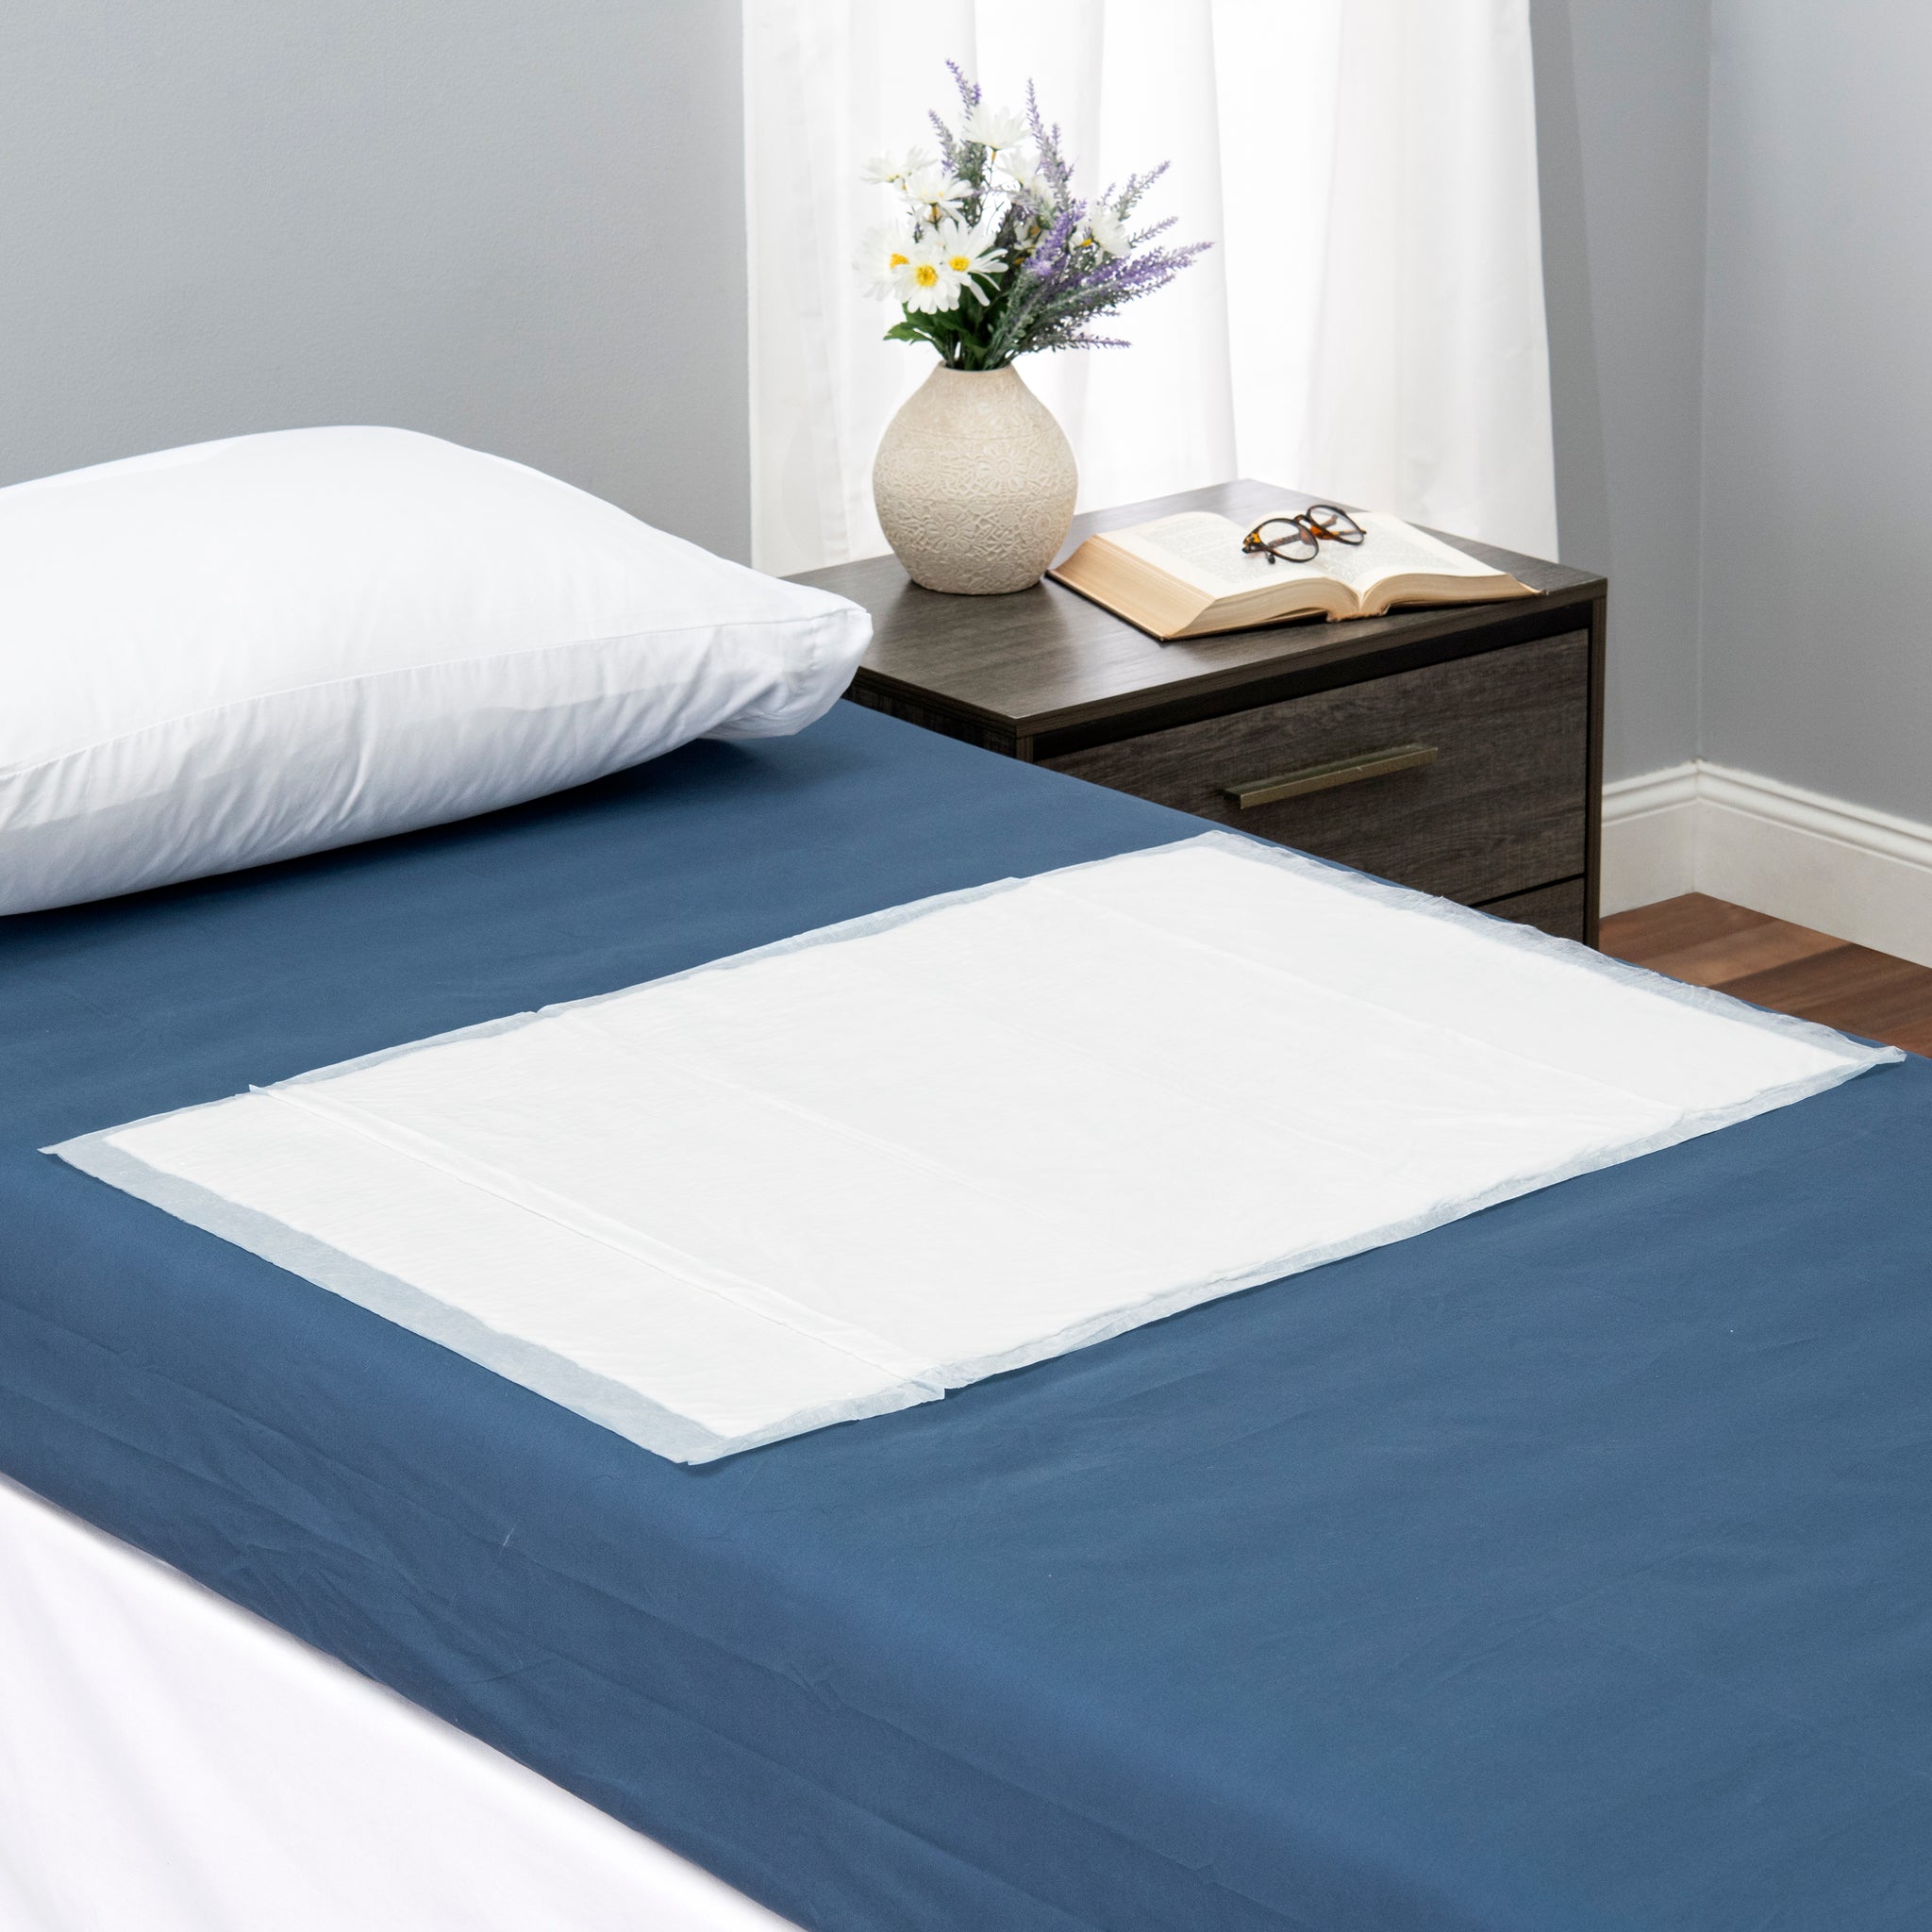 NEW Waterproof Bed Pad 36" x 24"